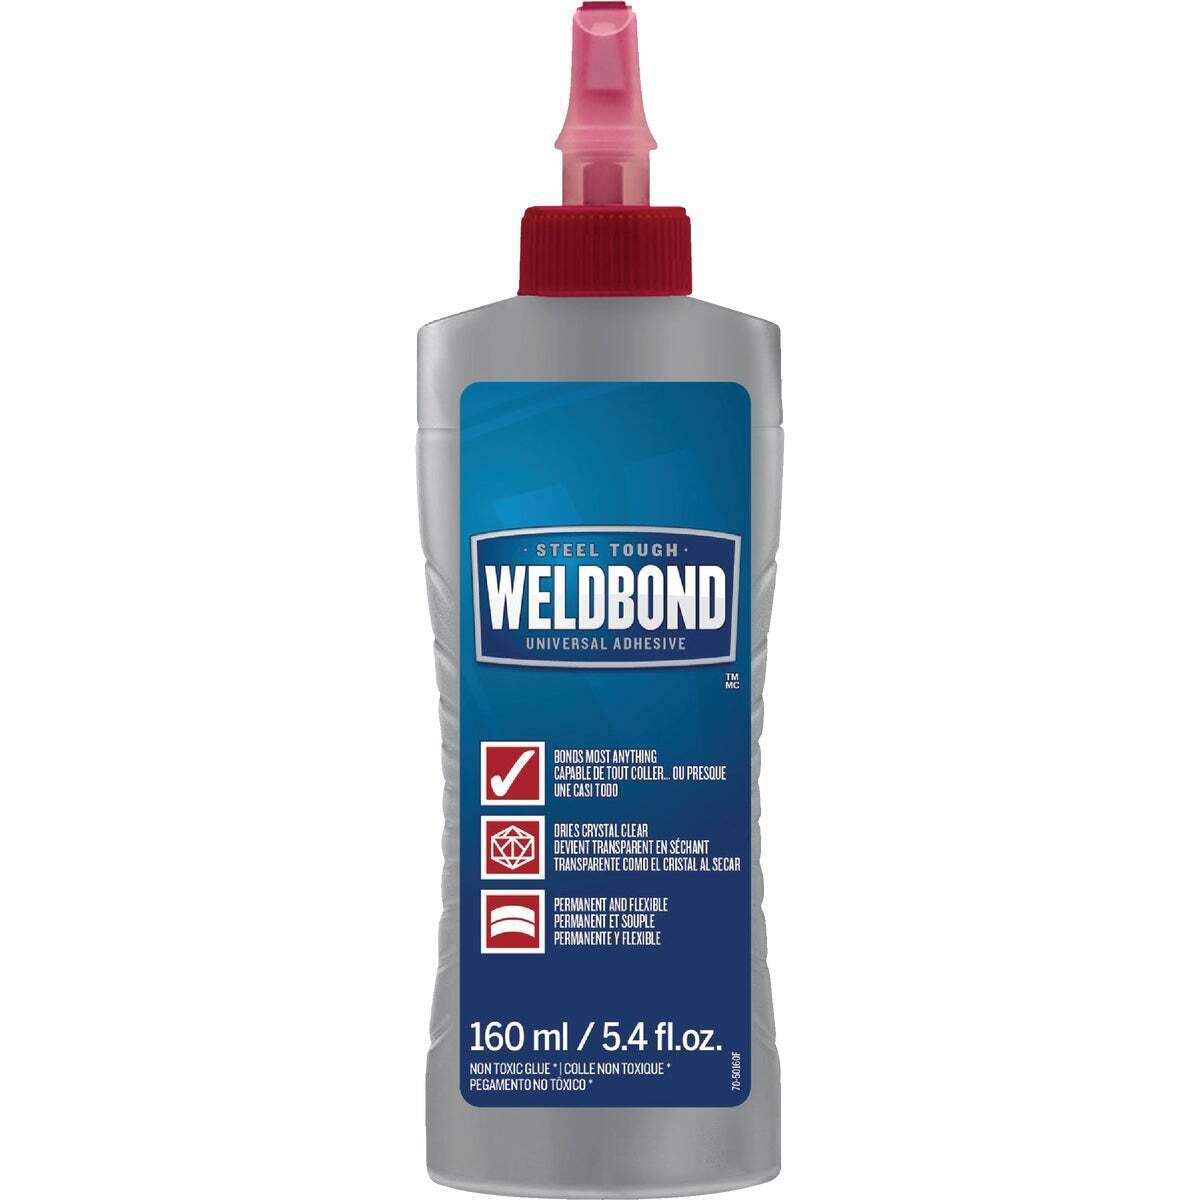 Weldbond 5.4 Oz. All-purpose Glue 8-50160 Weldbond 8-50160 5.4 Oz. 058951501602